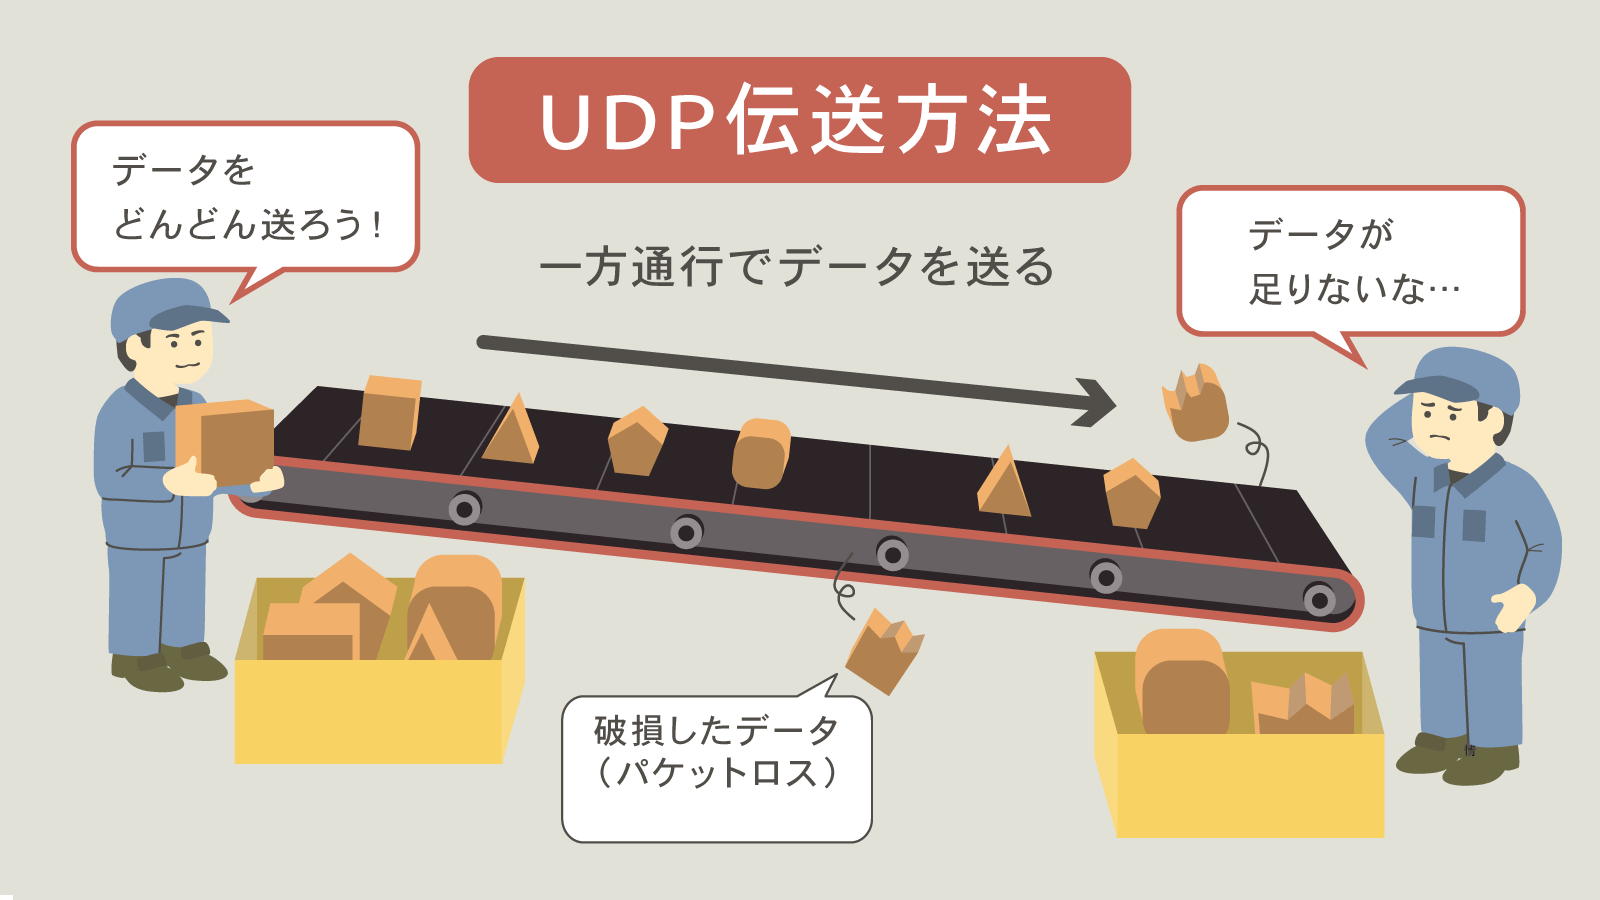 UDP伝送方式